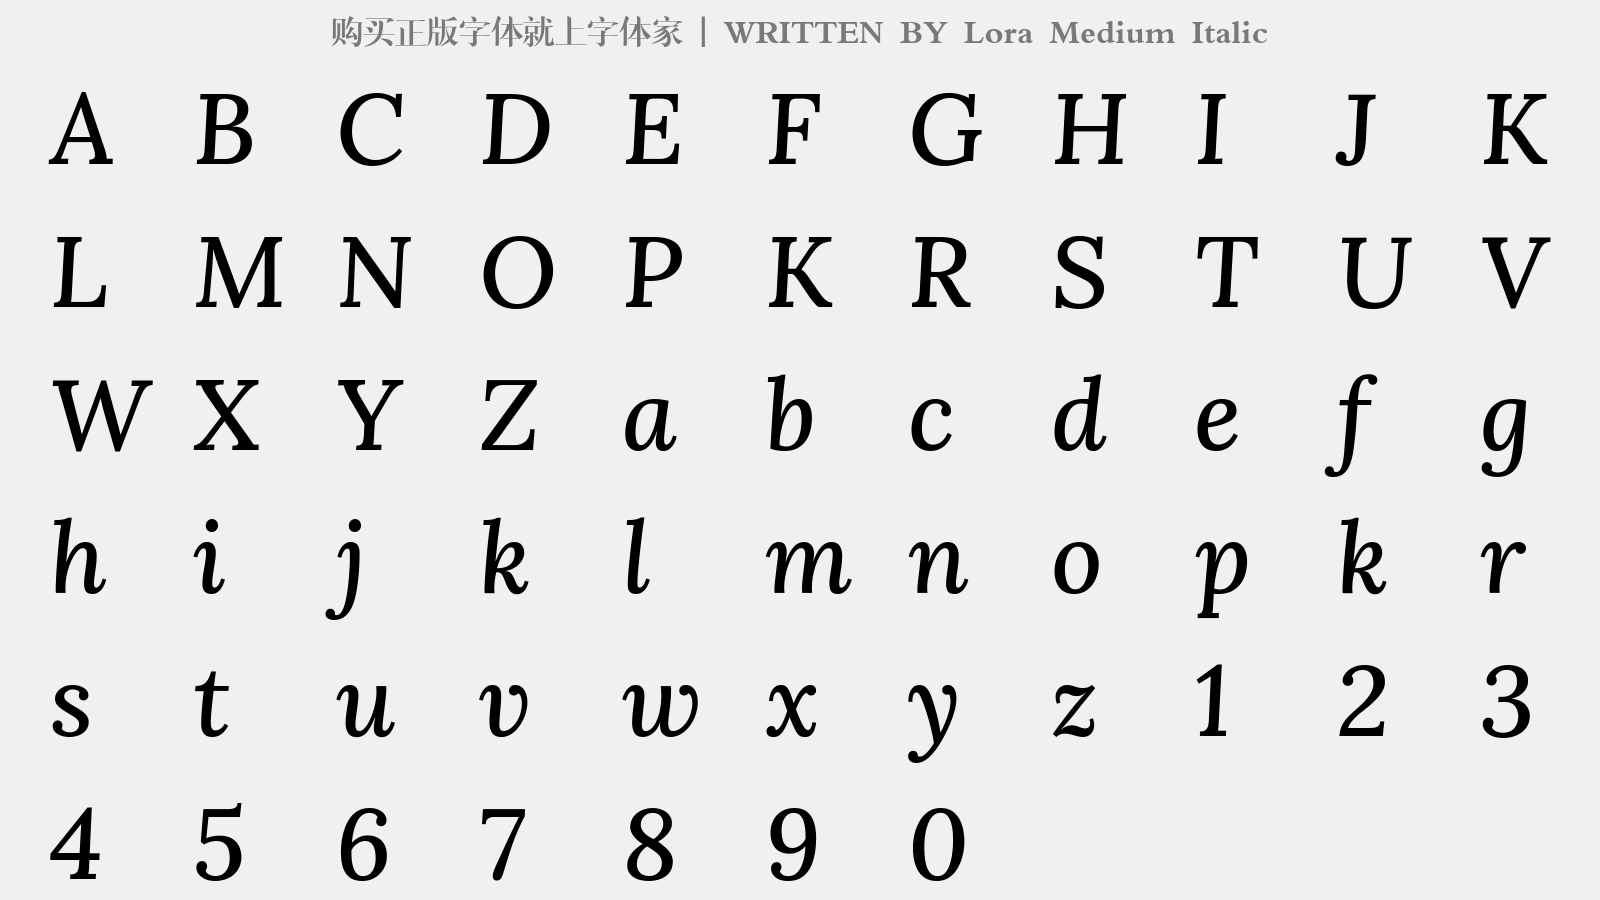 Lora Medium Italic - 大写字母/小写字母/数字